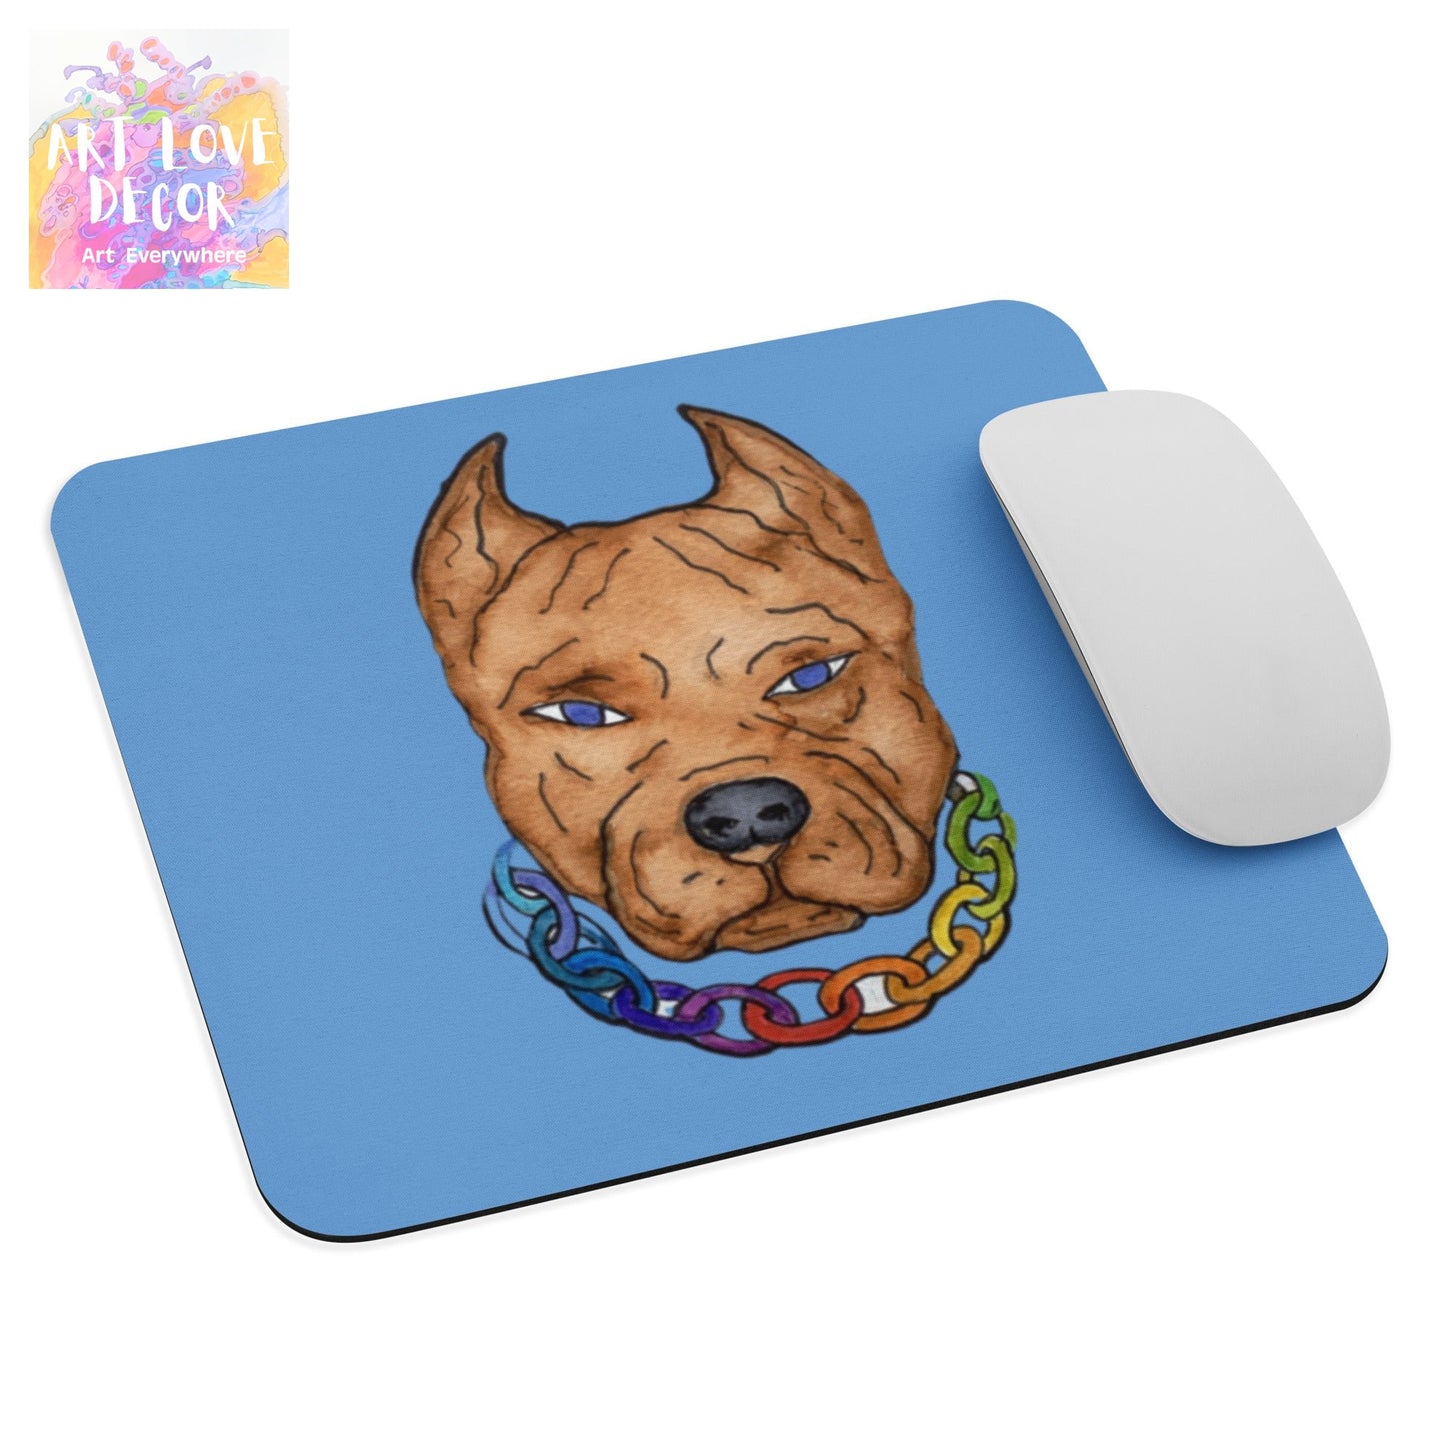 Pit Bull Chain Dog mouse pad - Art Love Decor